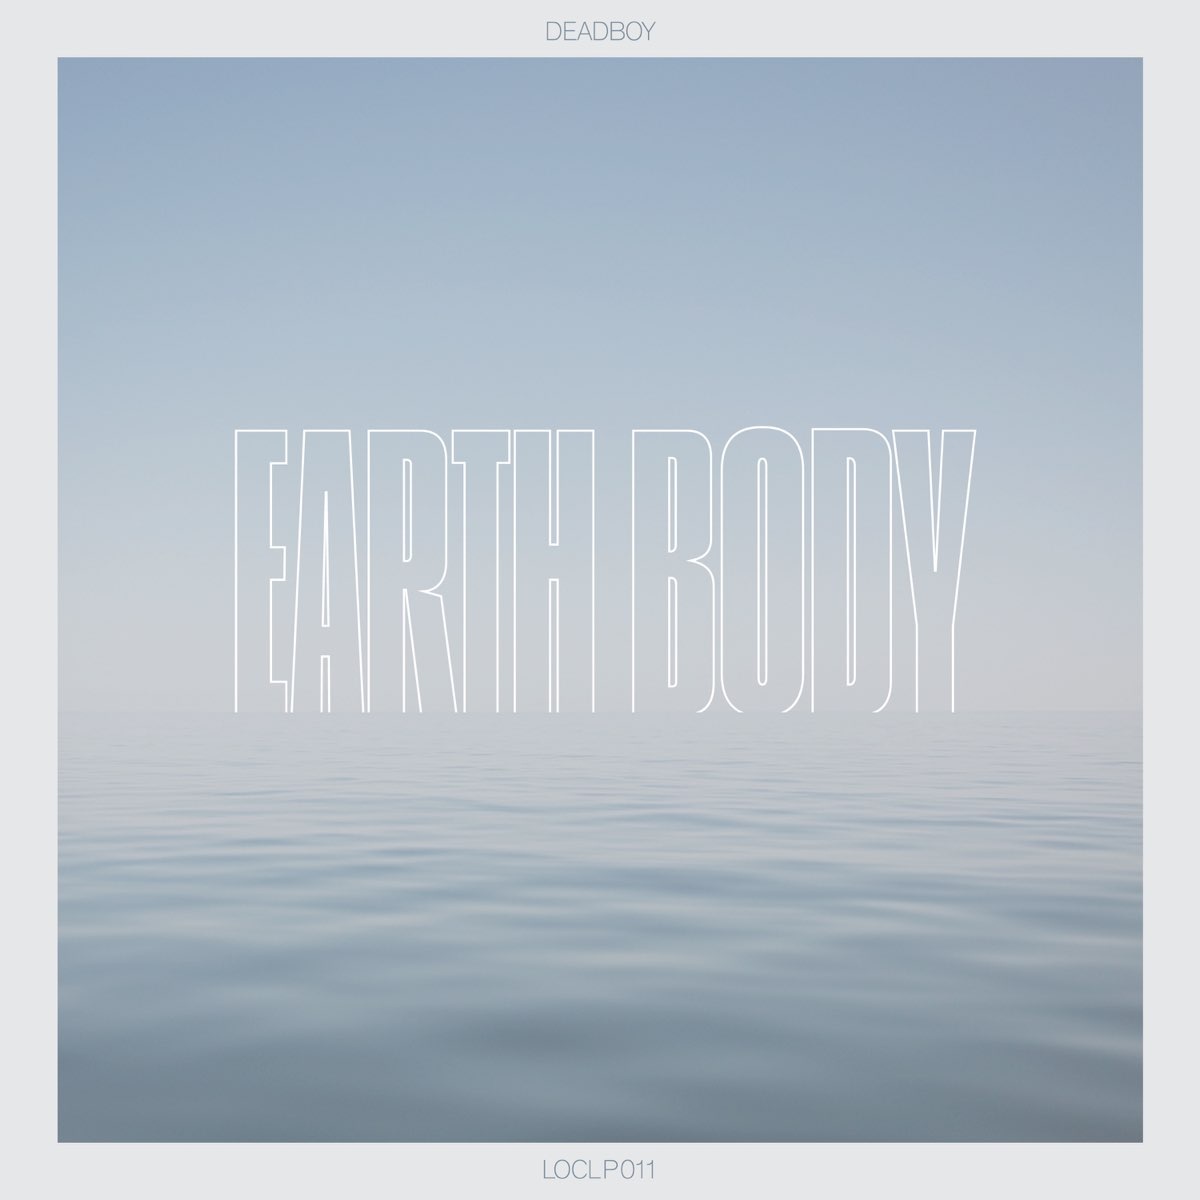 Deadboy - Earth Body vinyl cover